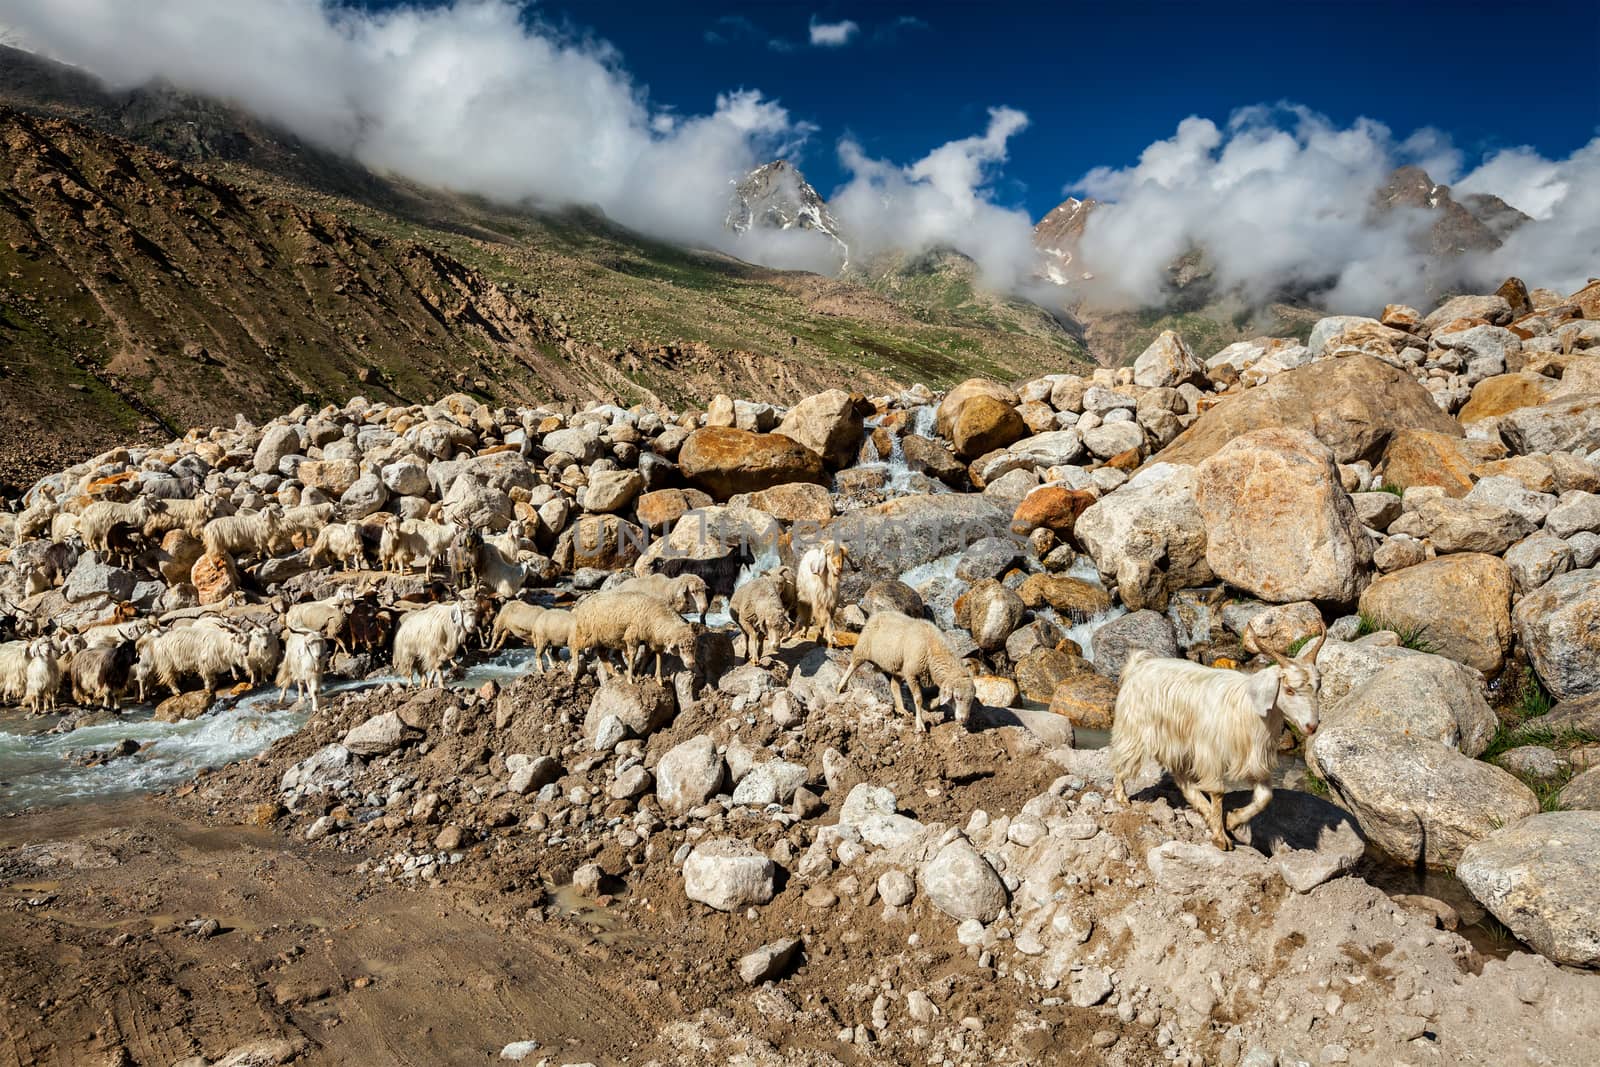 Herd of Pashmina sheep in Himalayas by dimol